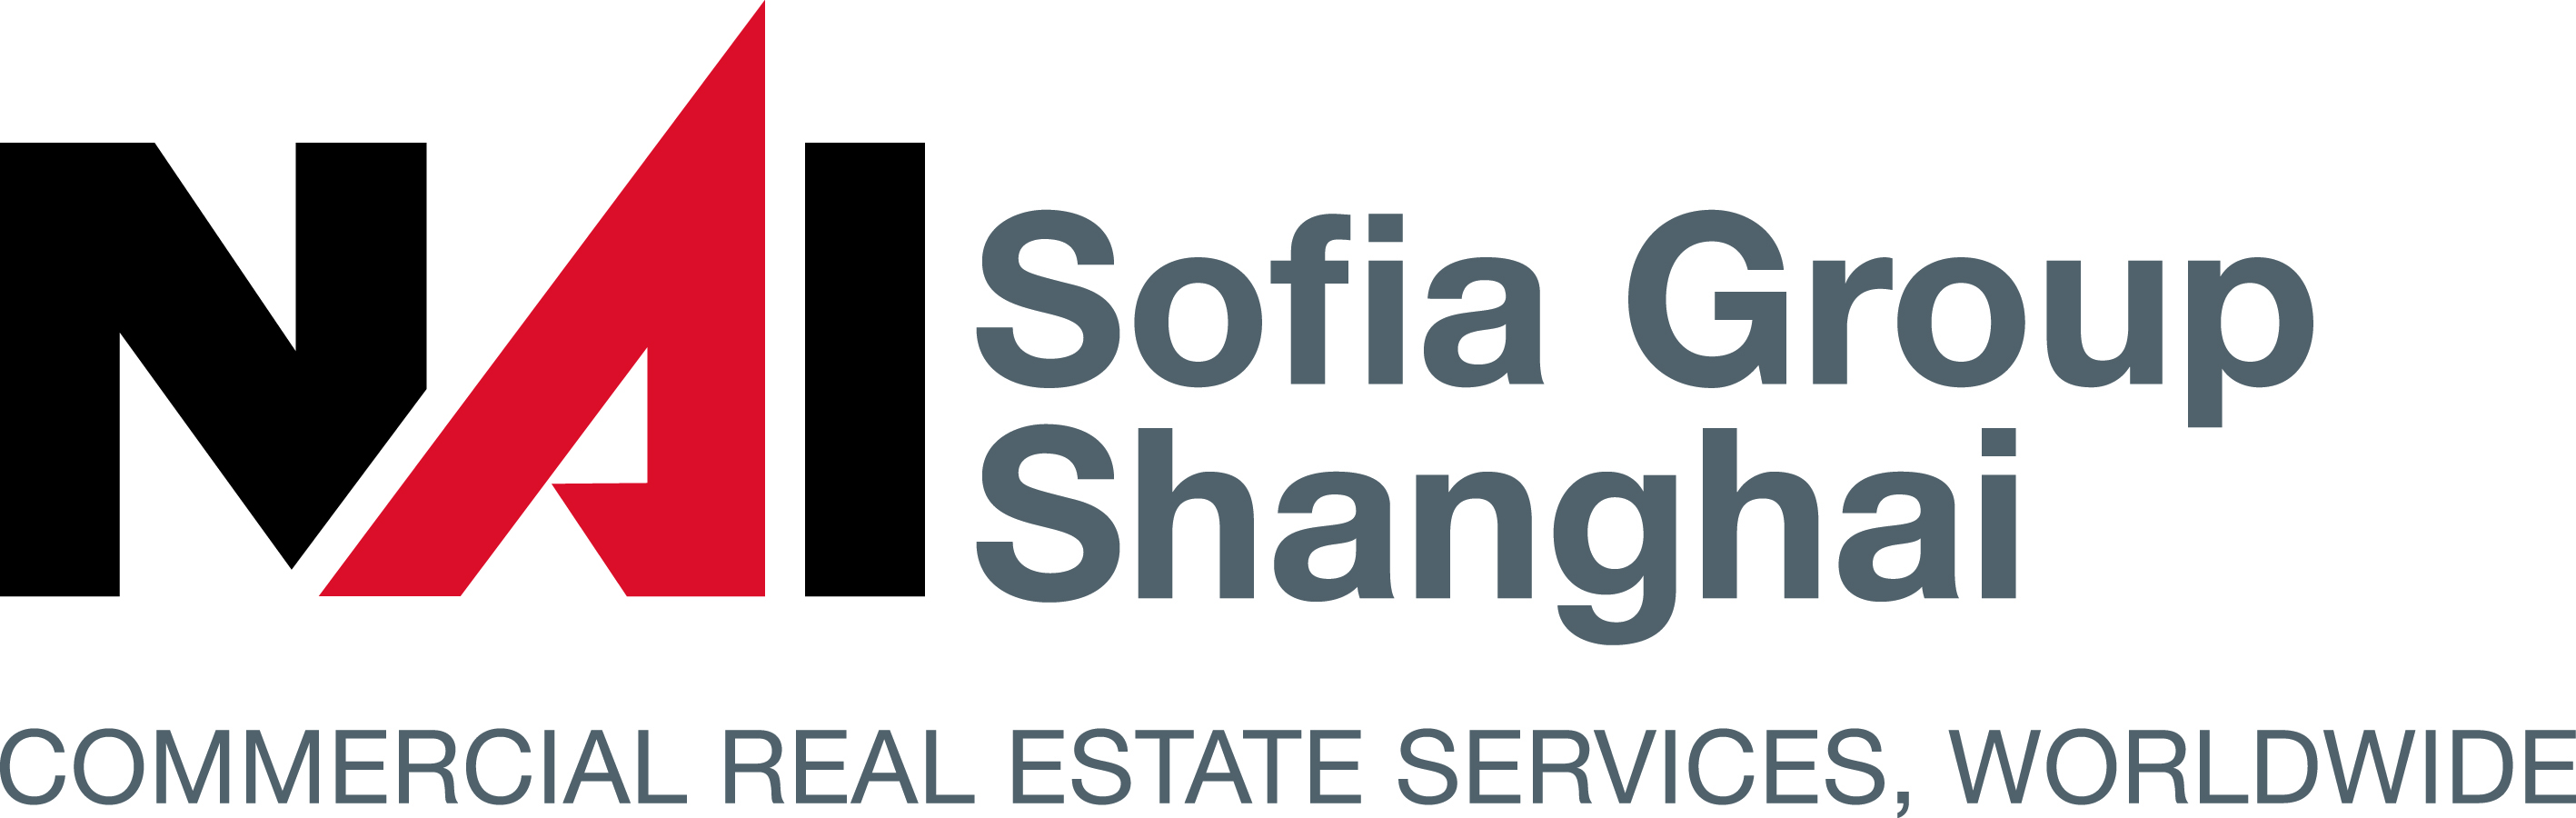 NAI Sofia Group Shanghai